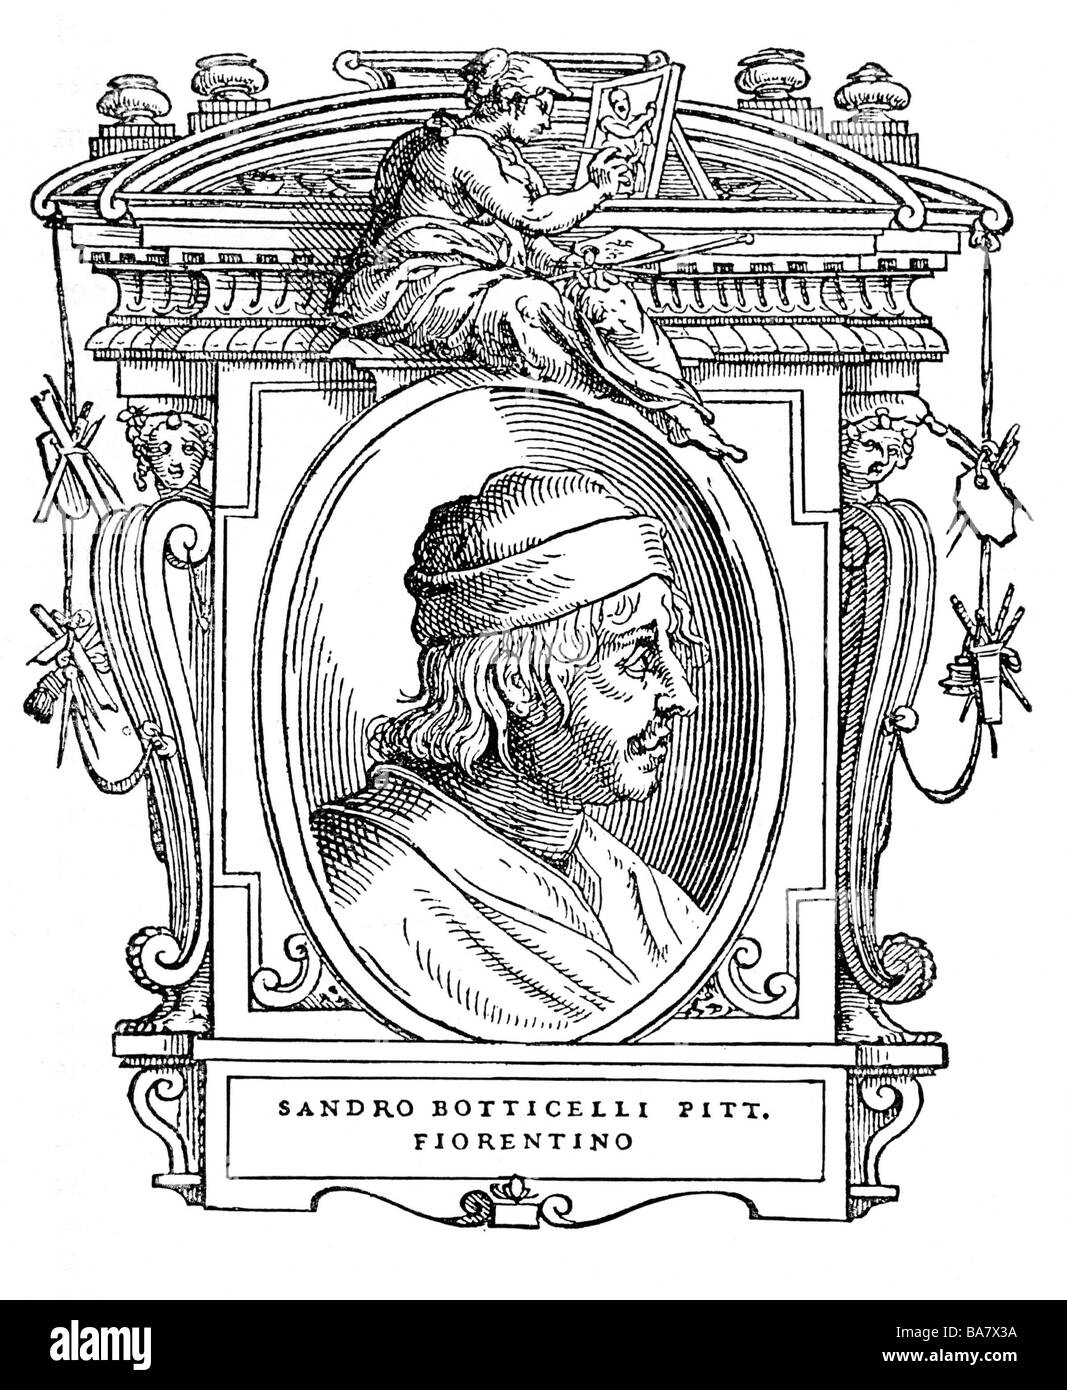 Botticelli, Sandro, 1.3.1445 - 17.5.1510, Italian artist (painter), portrait, later engraving, Stock Photo